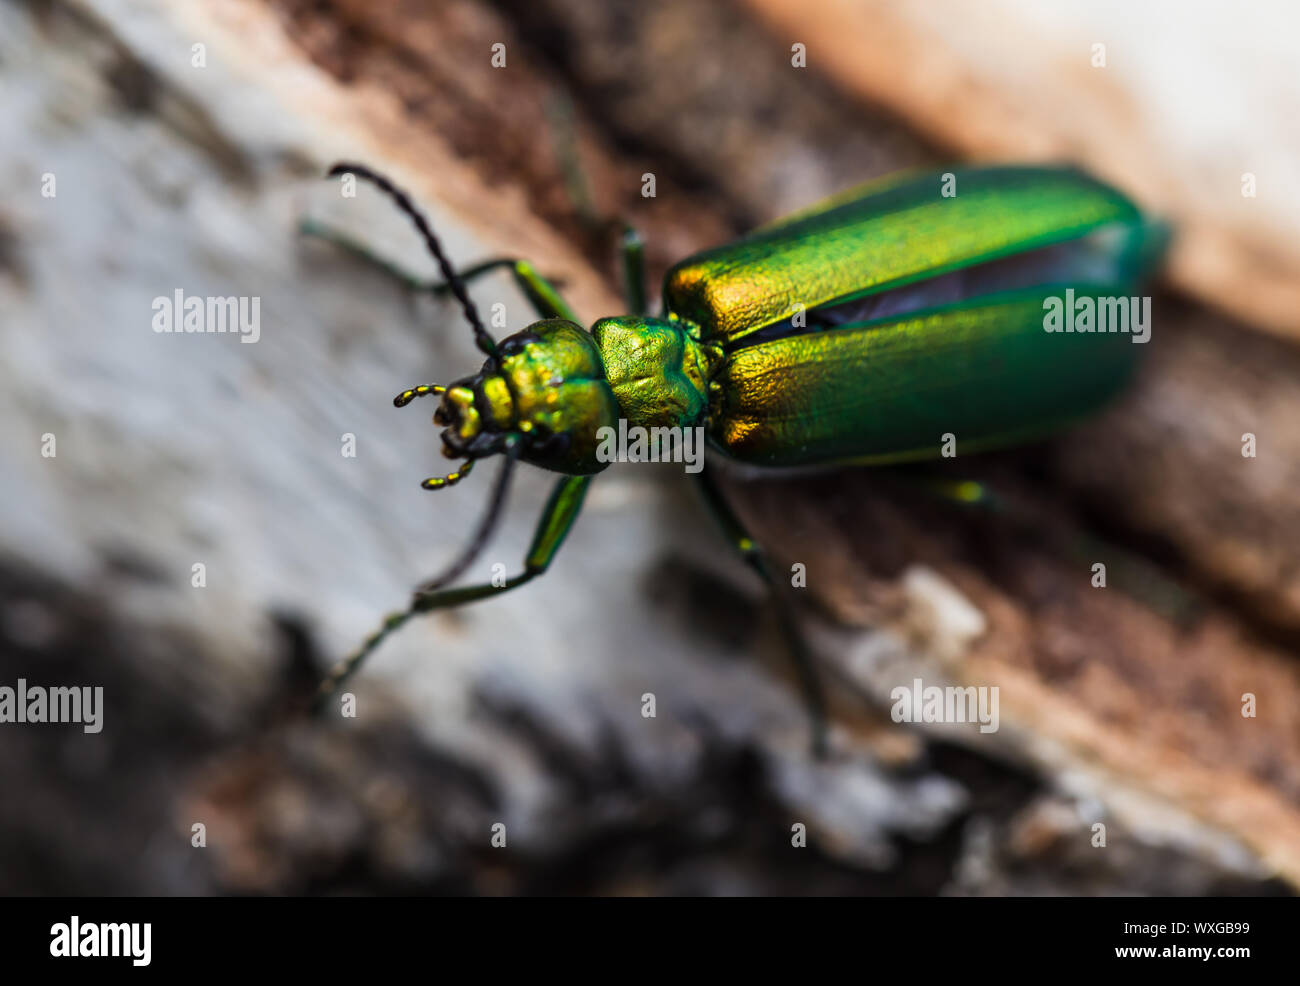 cantharis lytta vesicatoria, green beetle on a birch stump Stock Photo